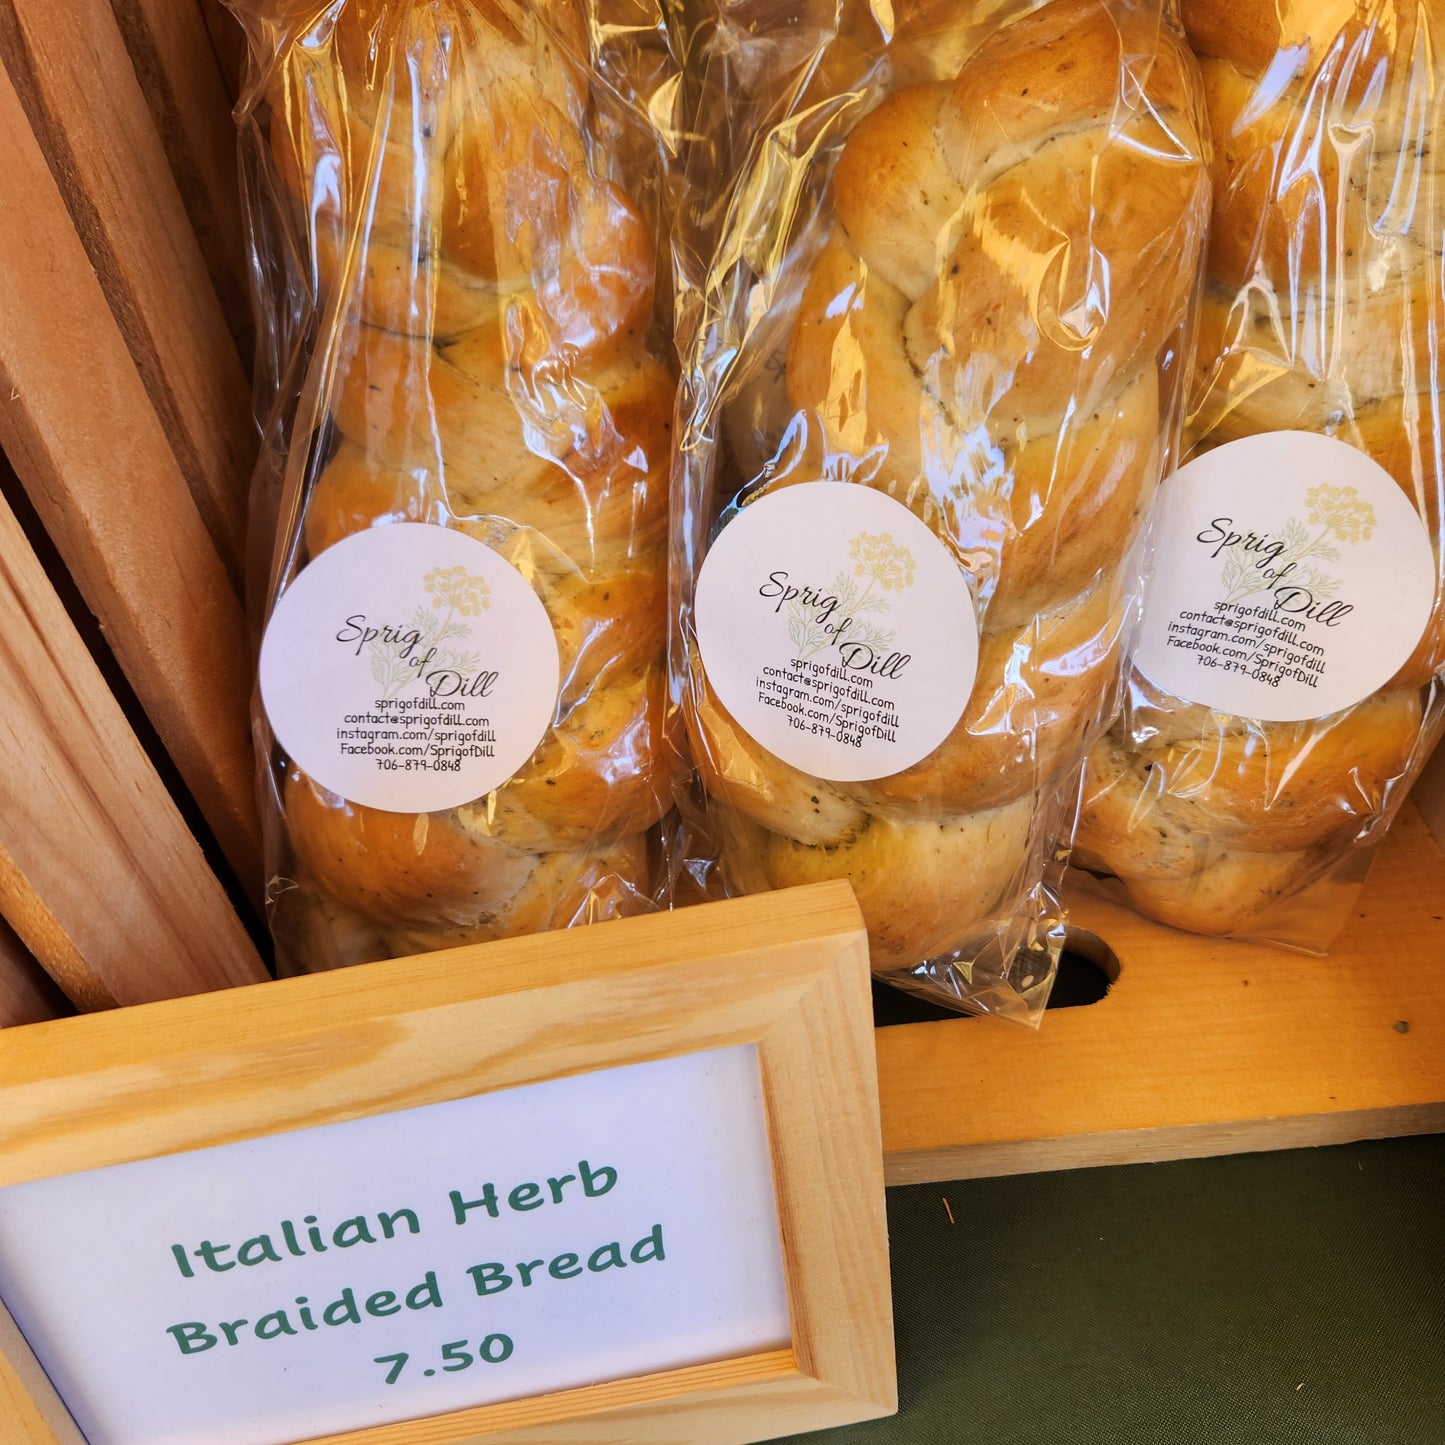 Italian Herb Braided Bread